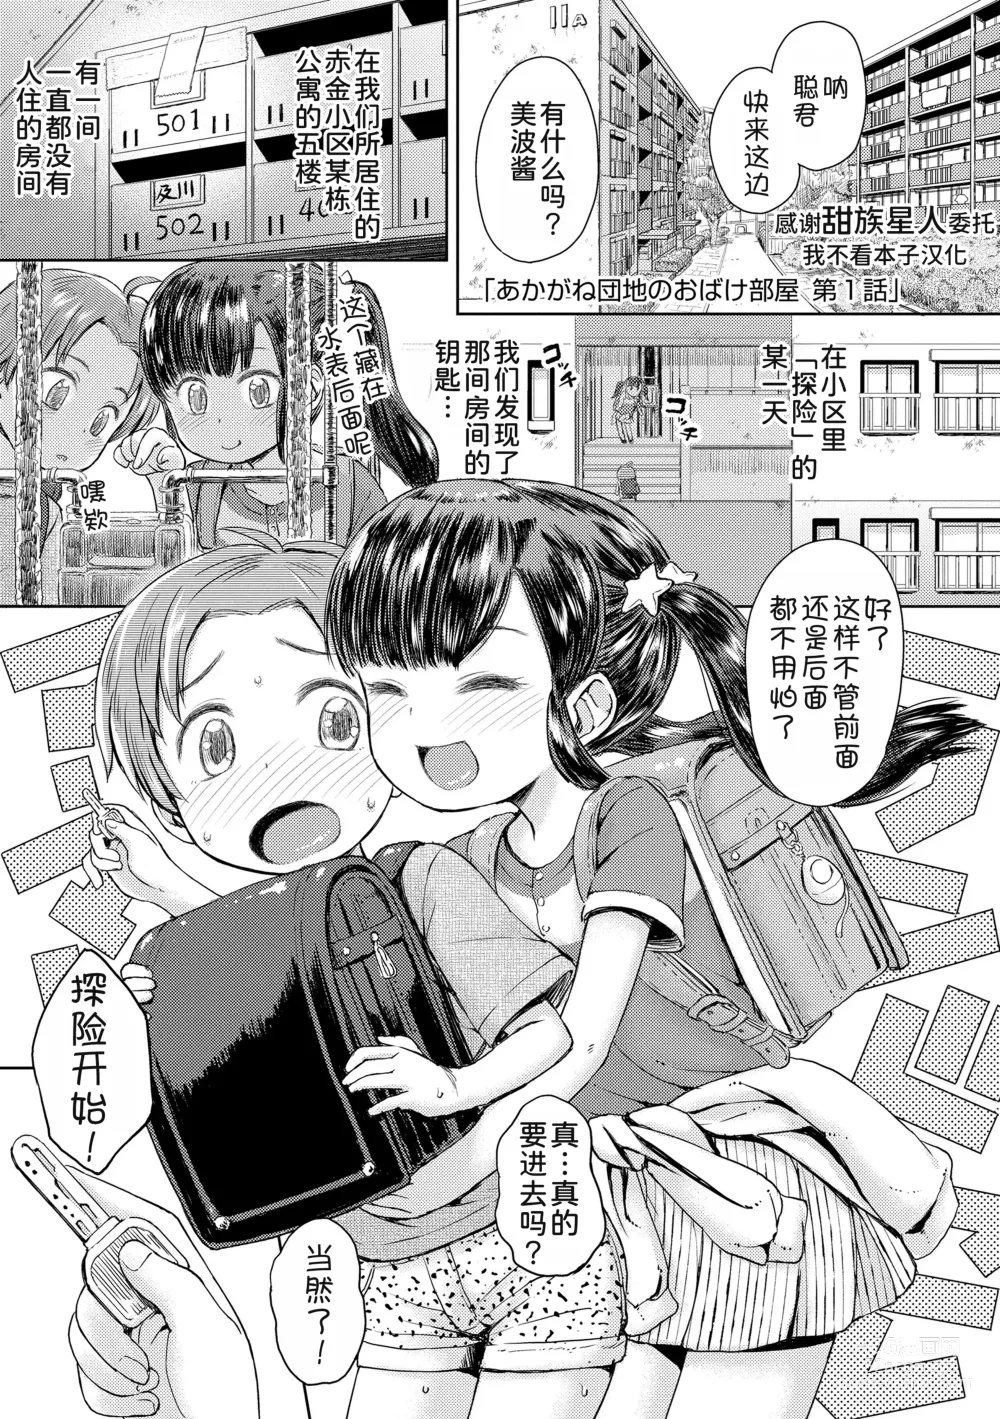 Page 1 of manga Akagane Danchi no Obake Heya Ch. 1-3